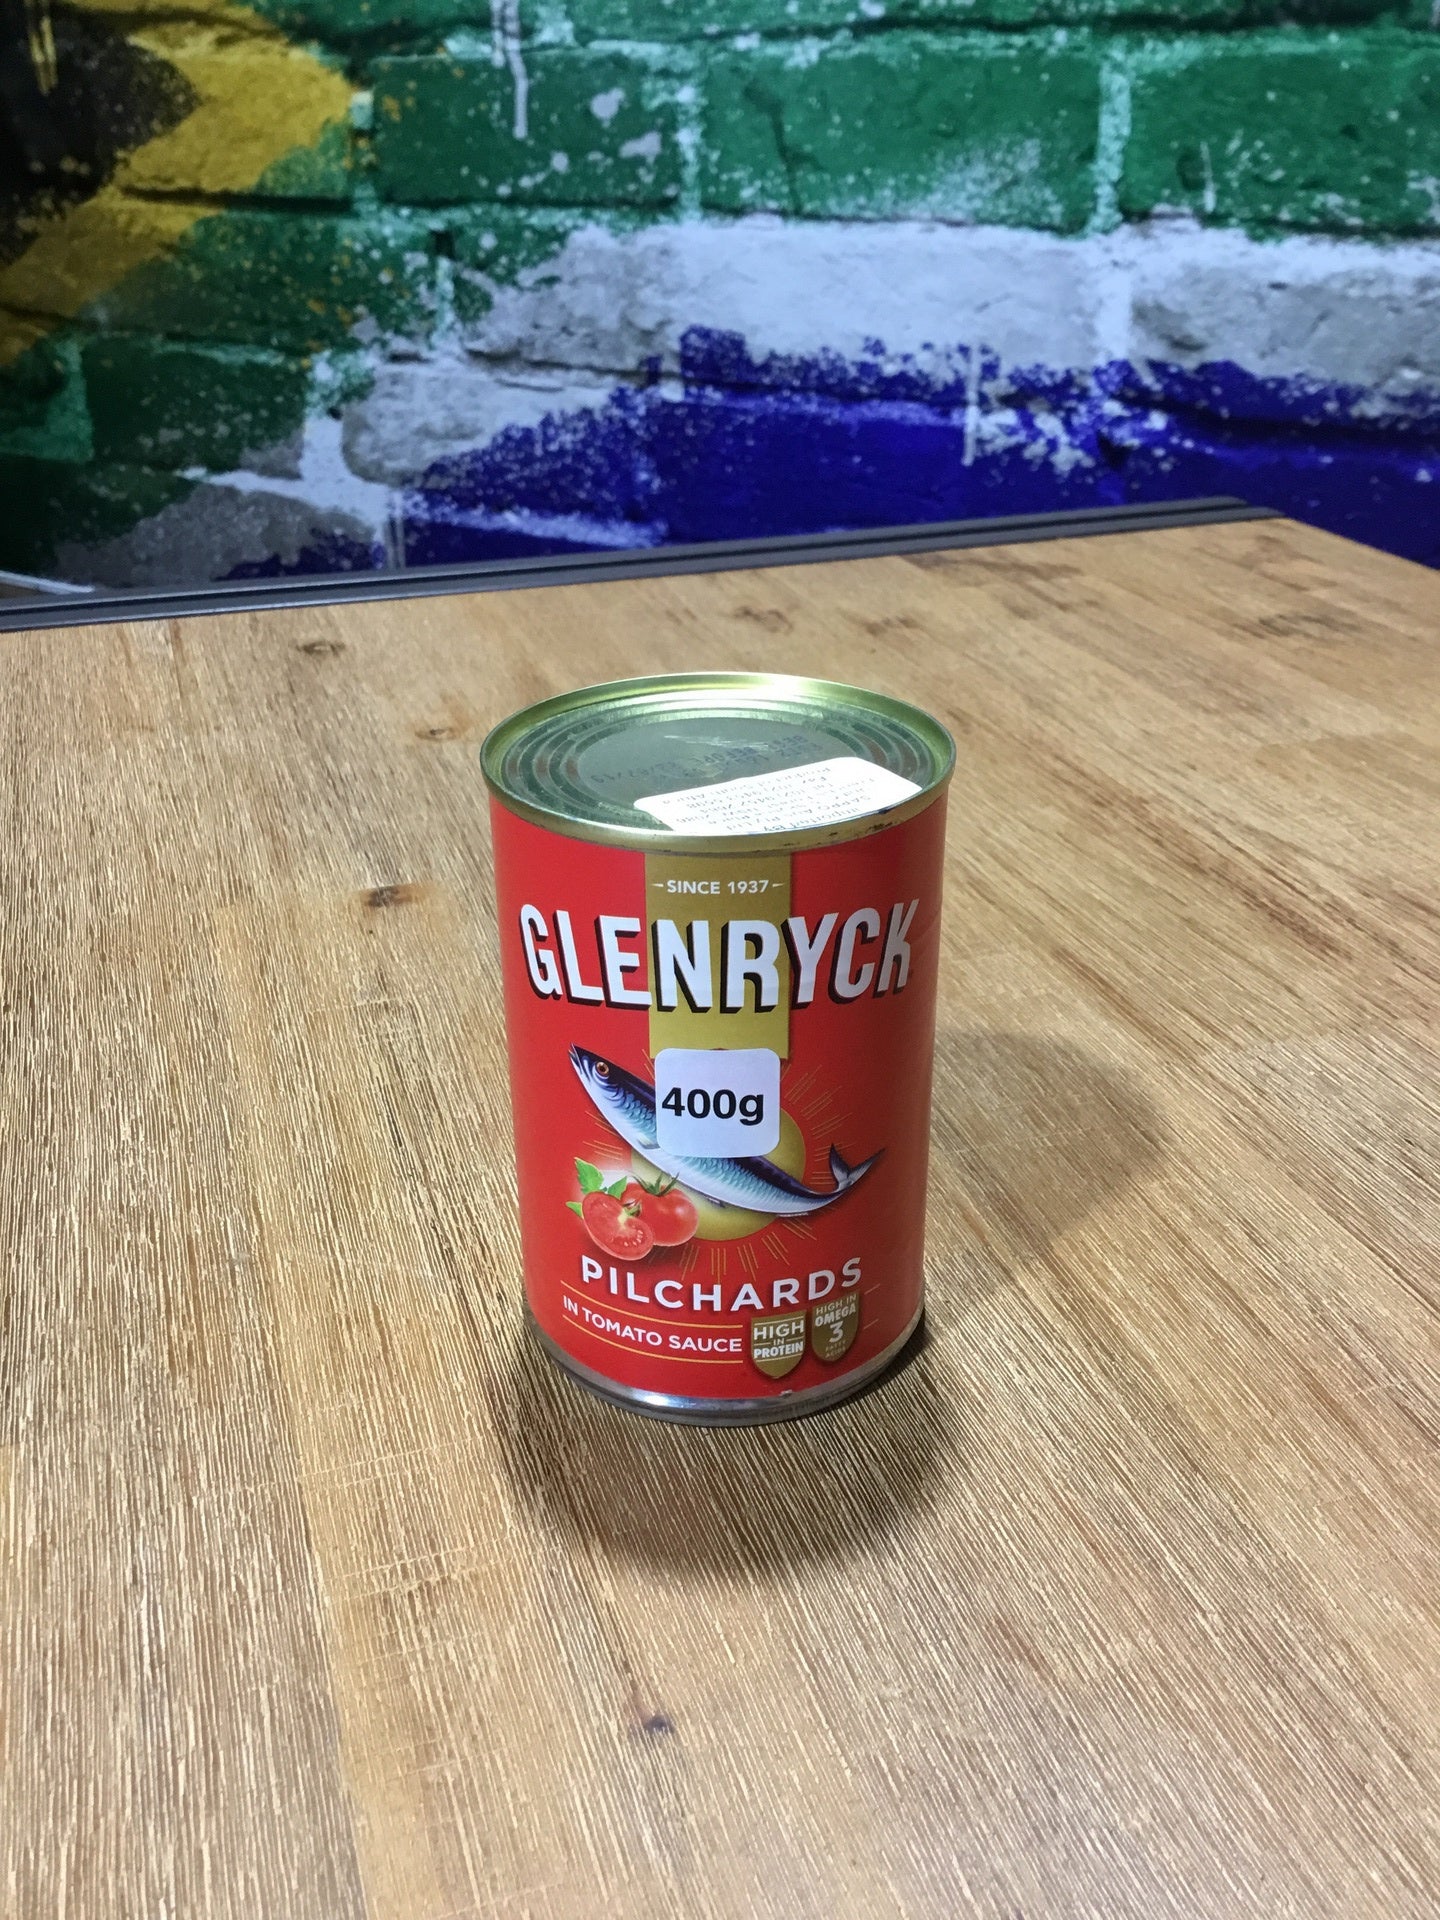 Glenryck Pilchards Tom/Sauce 400g